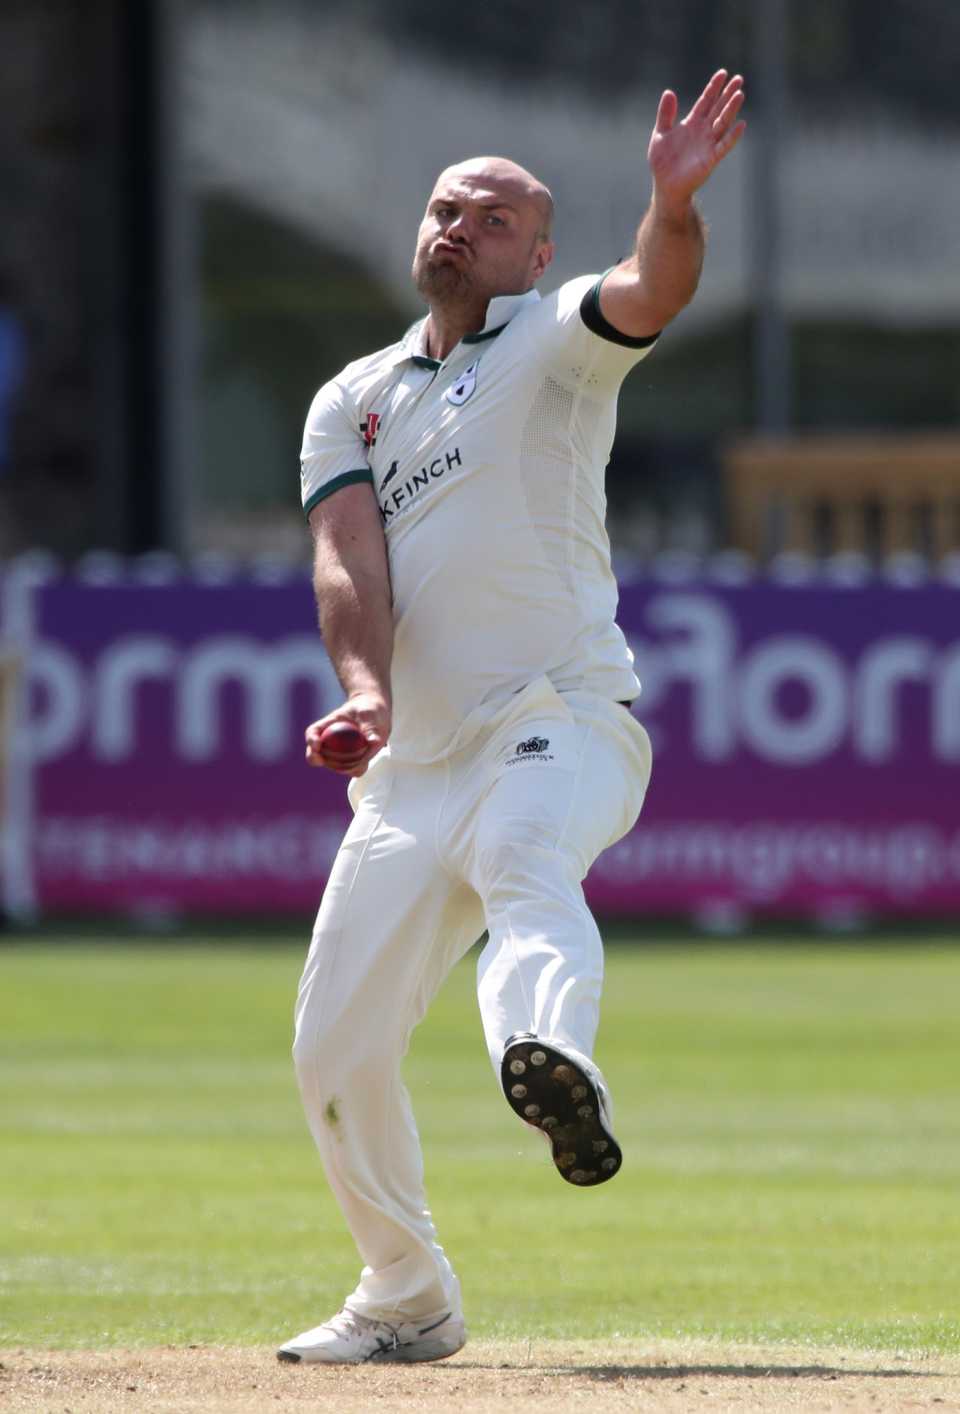 Joe Leach took four wickets in a devastating five-over spell